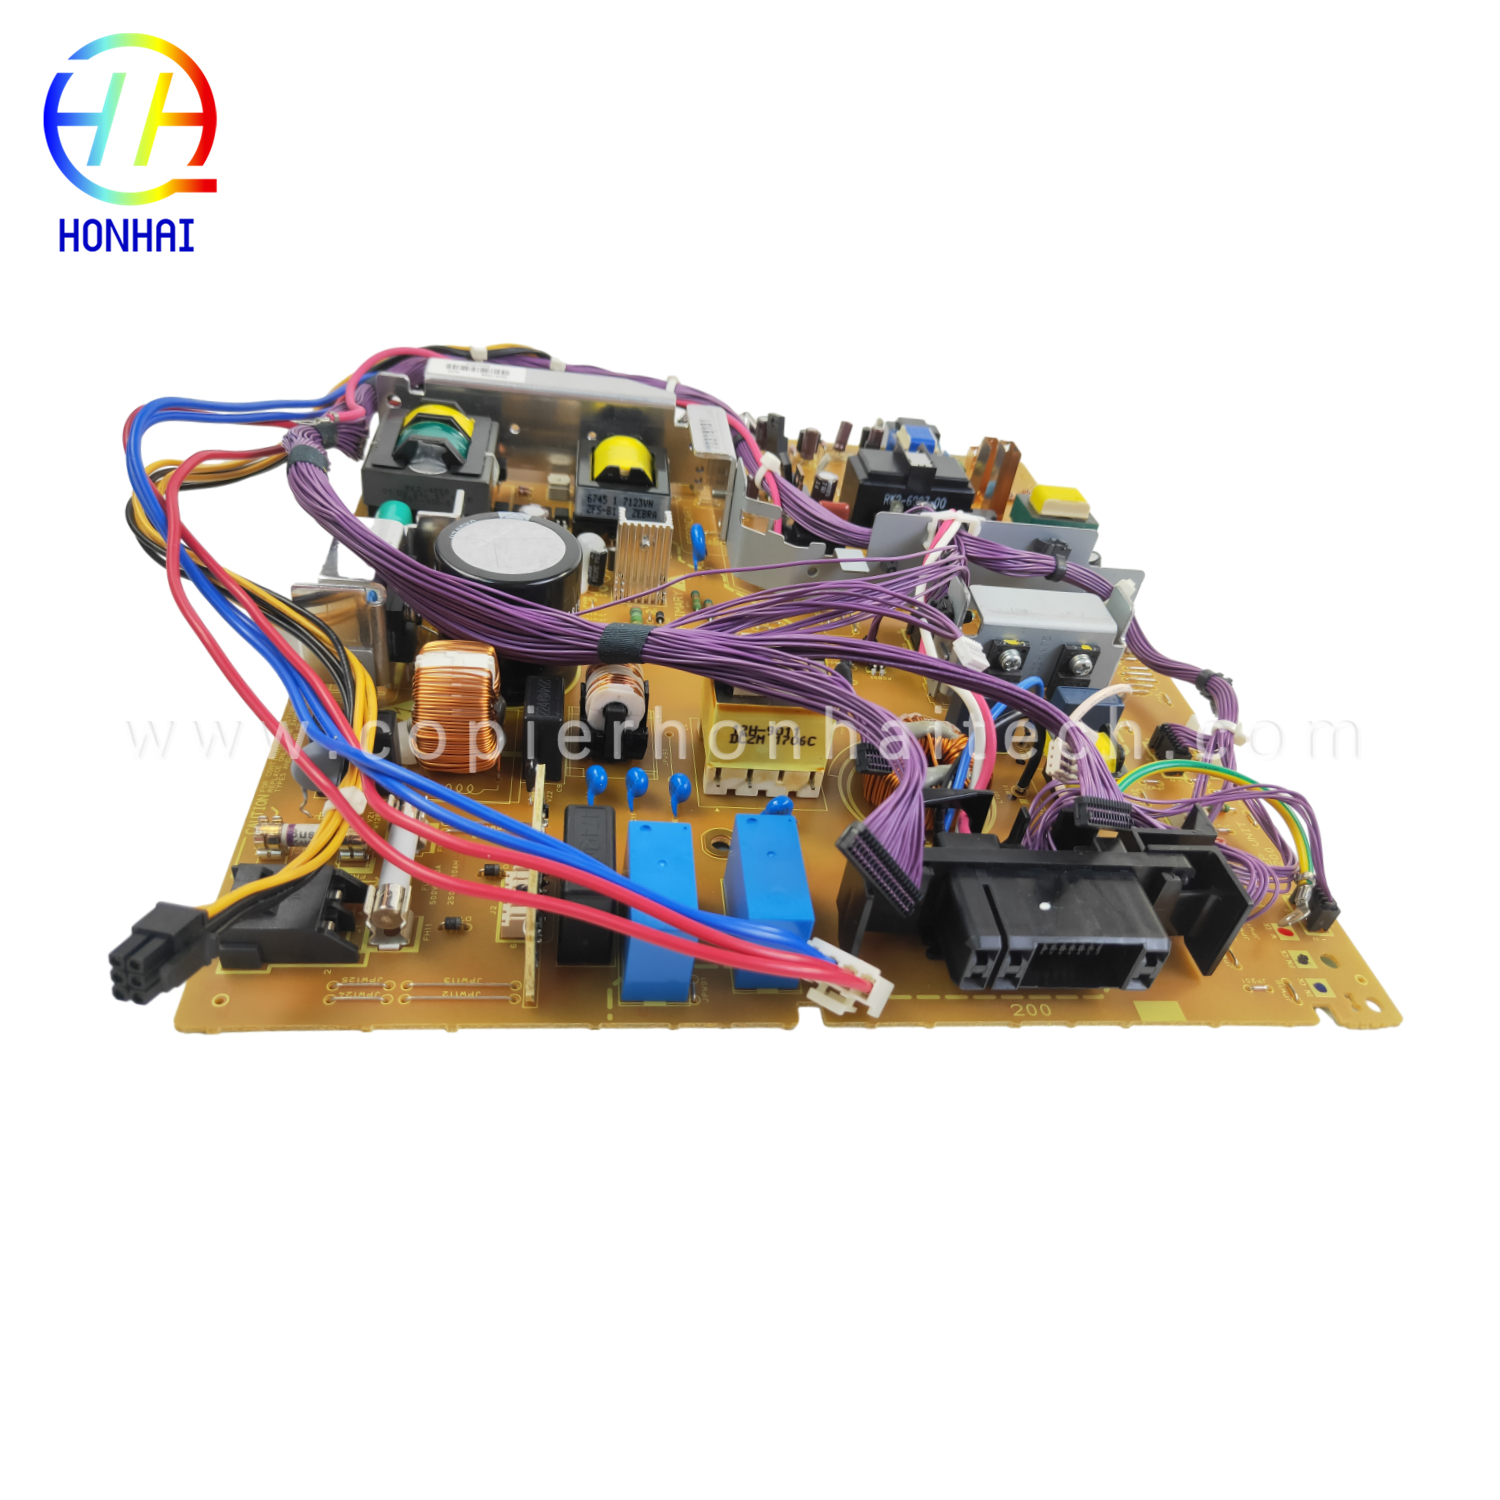 https://www.copierhonhaitech.com/motor-voeding-voor-hp-laserjet-ent-m604-m605-m606-rm2-7657-rm2-7641-power-supply-assy-product/